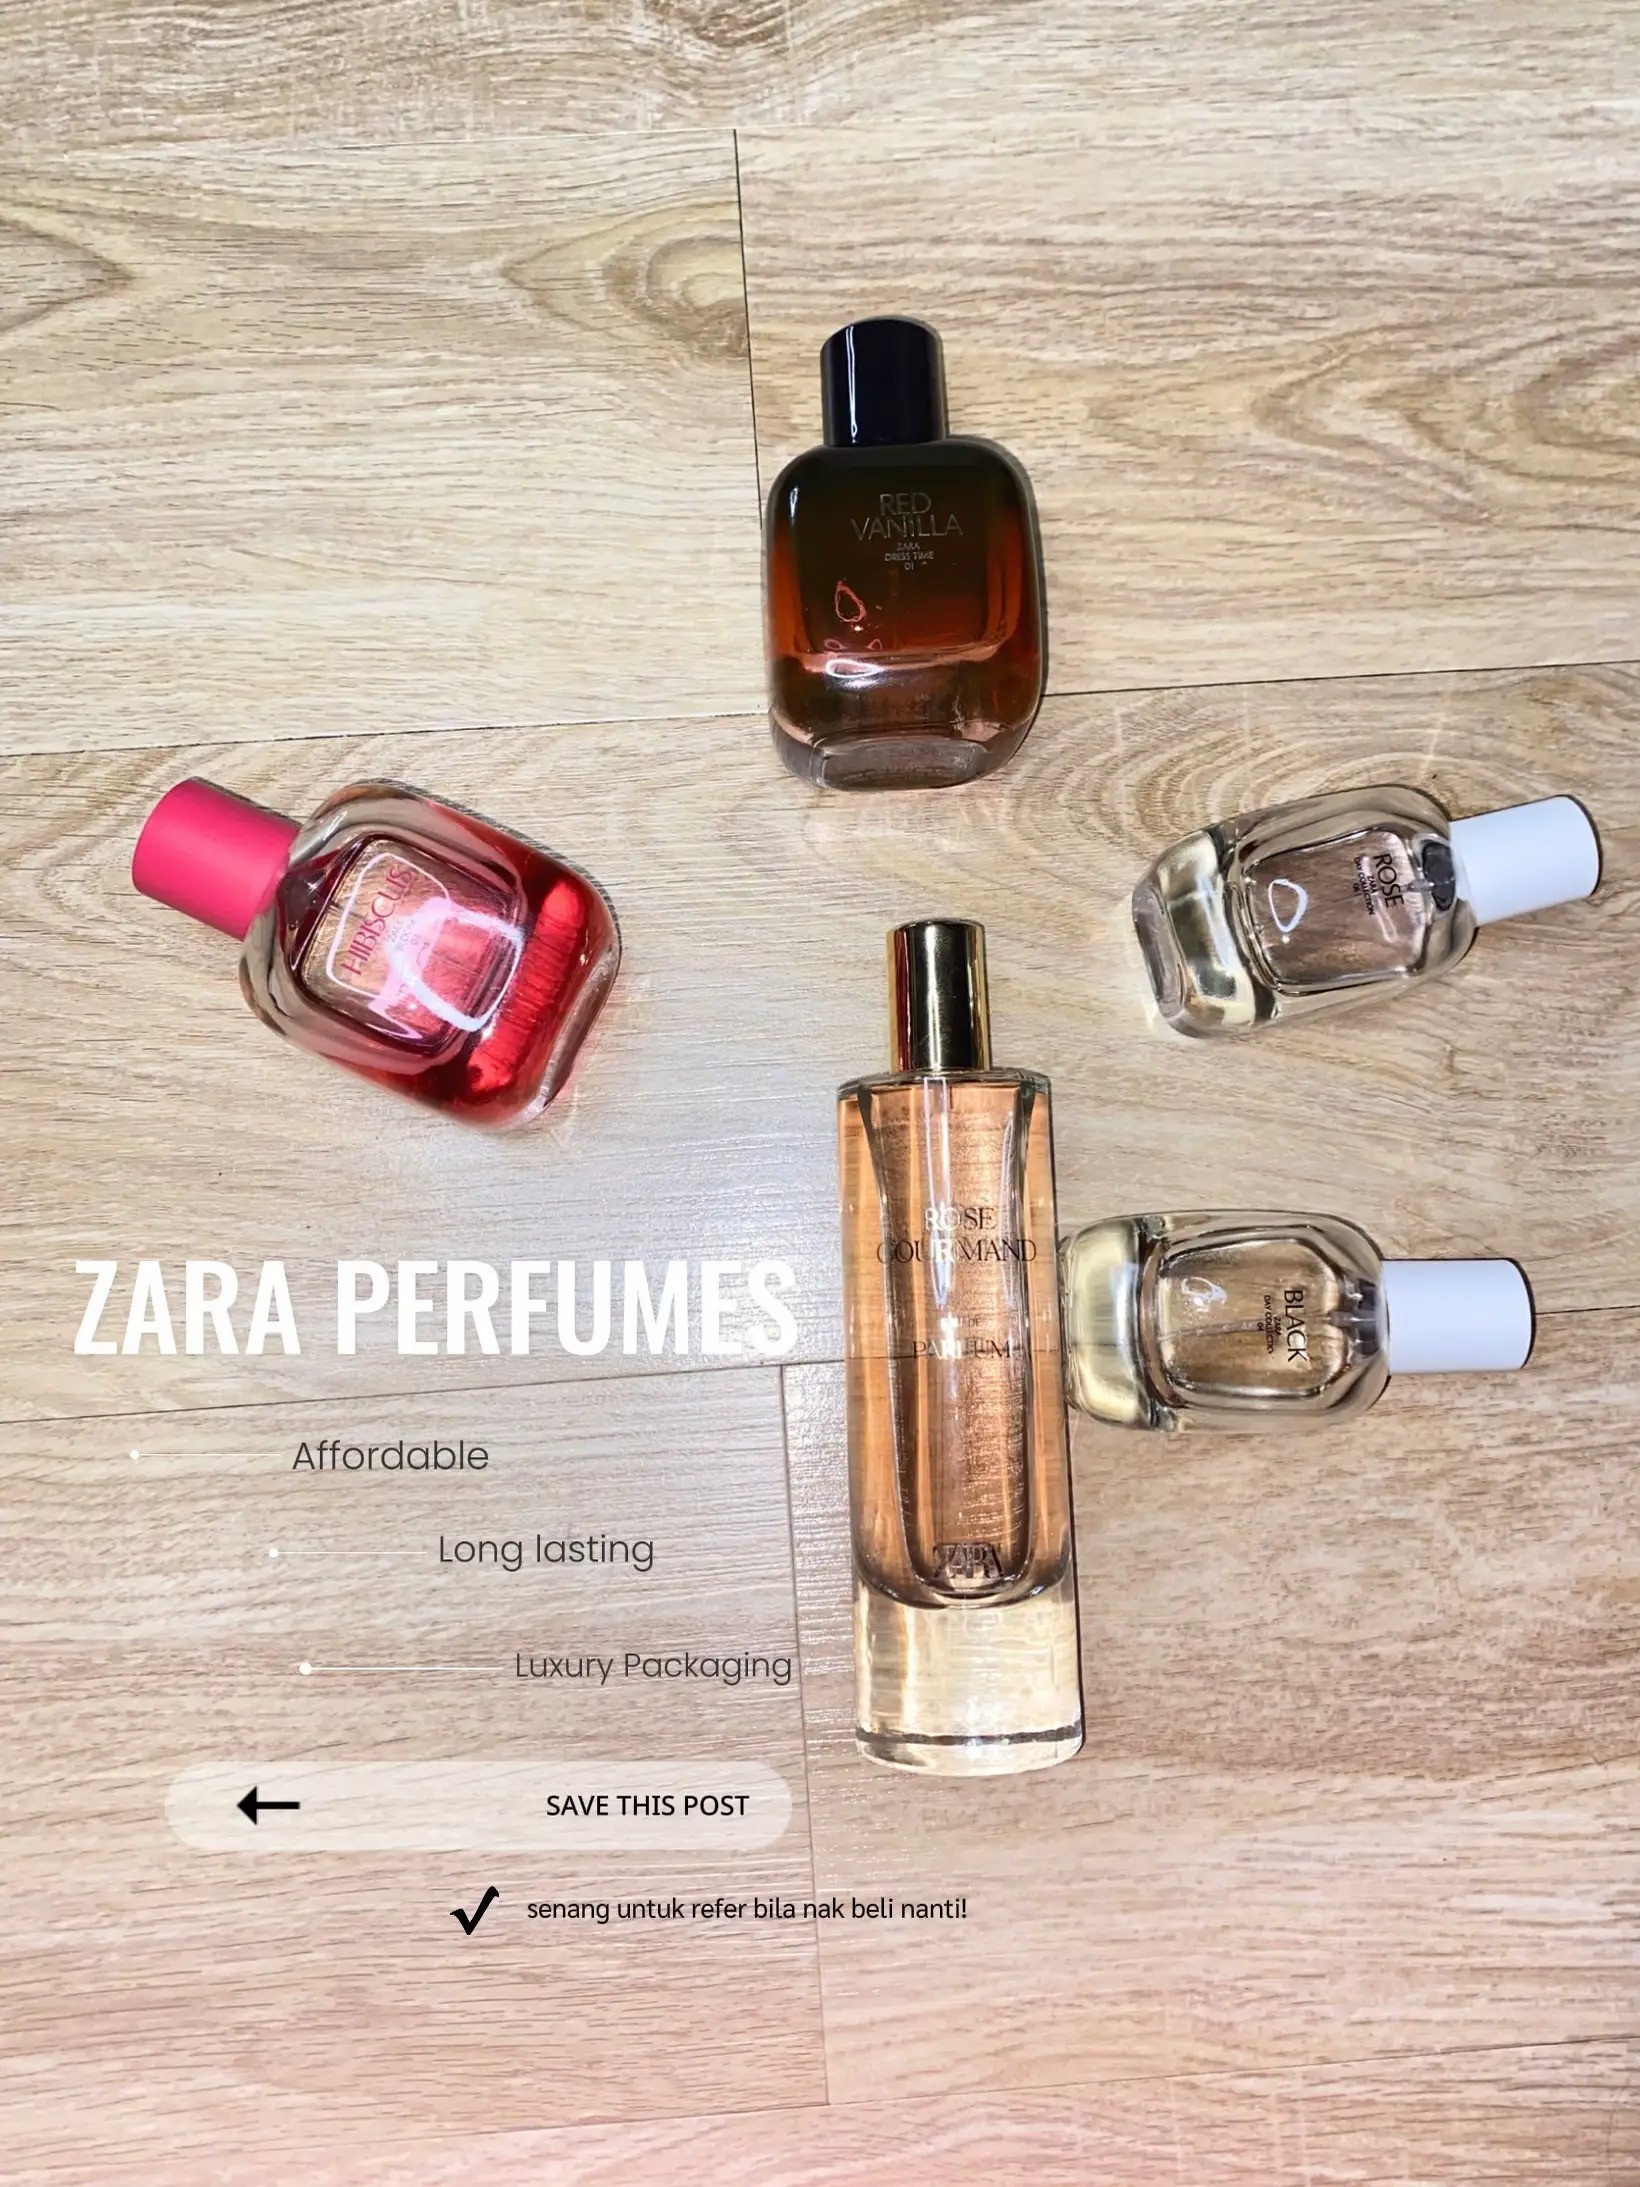 7 Perfume Dupes For Famous Luxury Fragrances